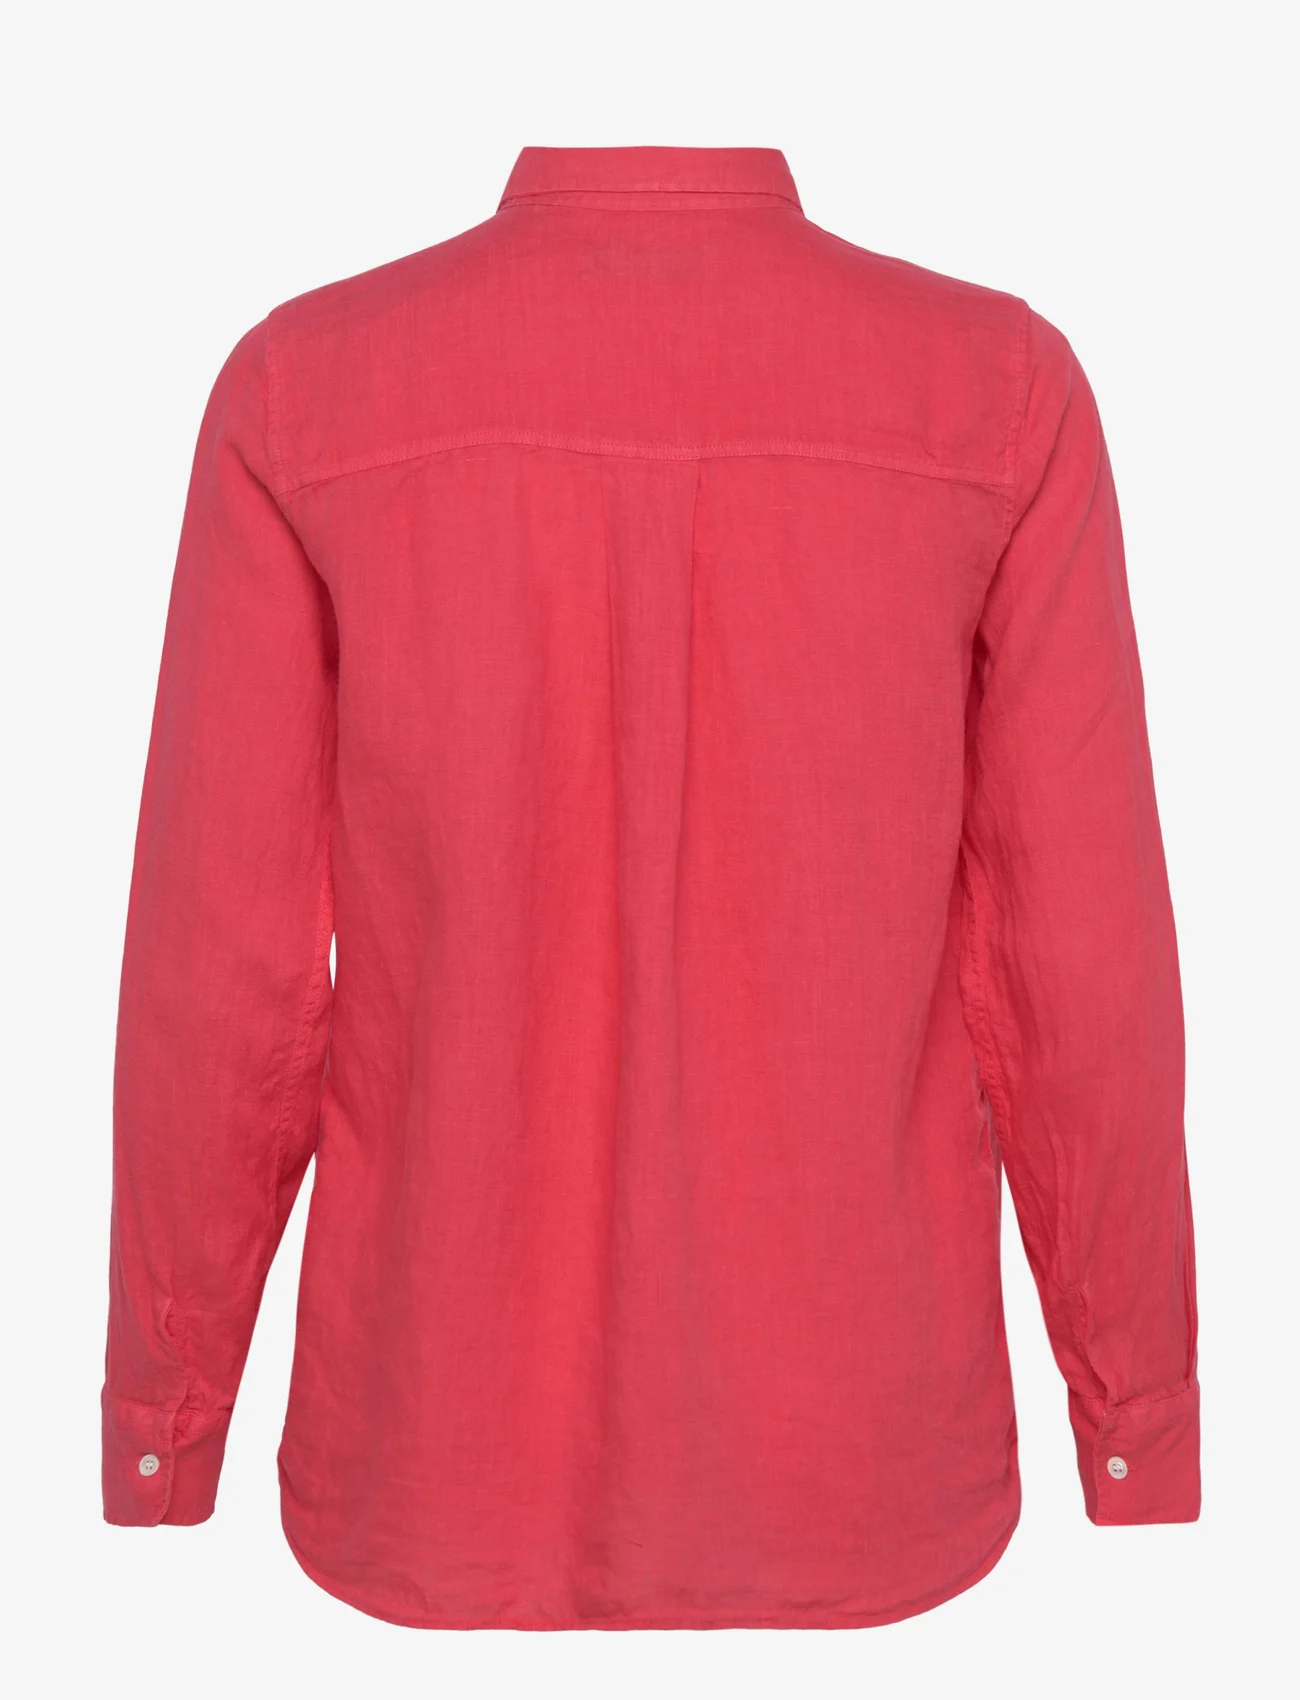 MOS MOSH - Karli Linen Shirt - hørskjorter - teaberry - 1